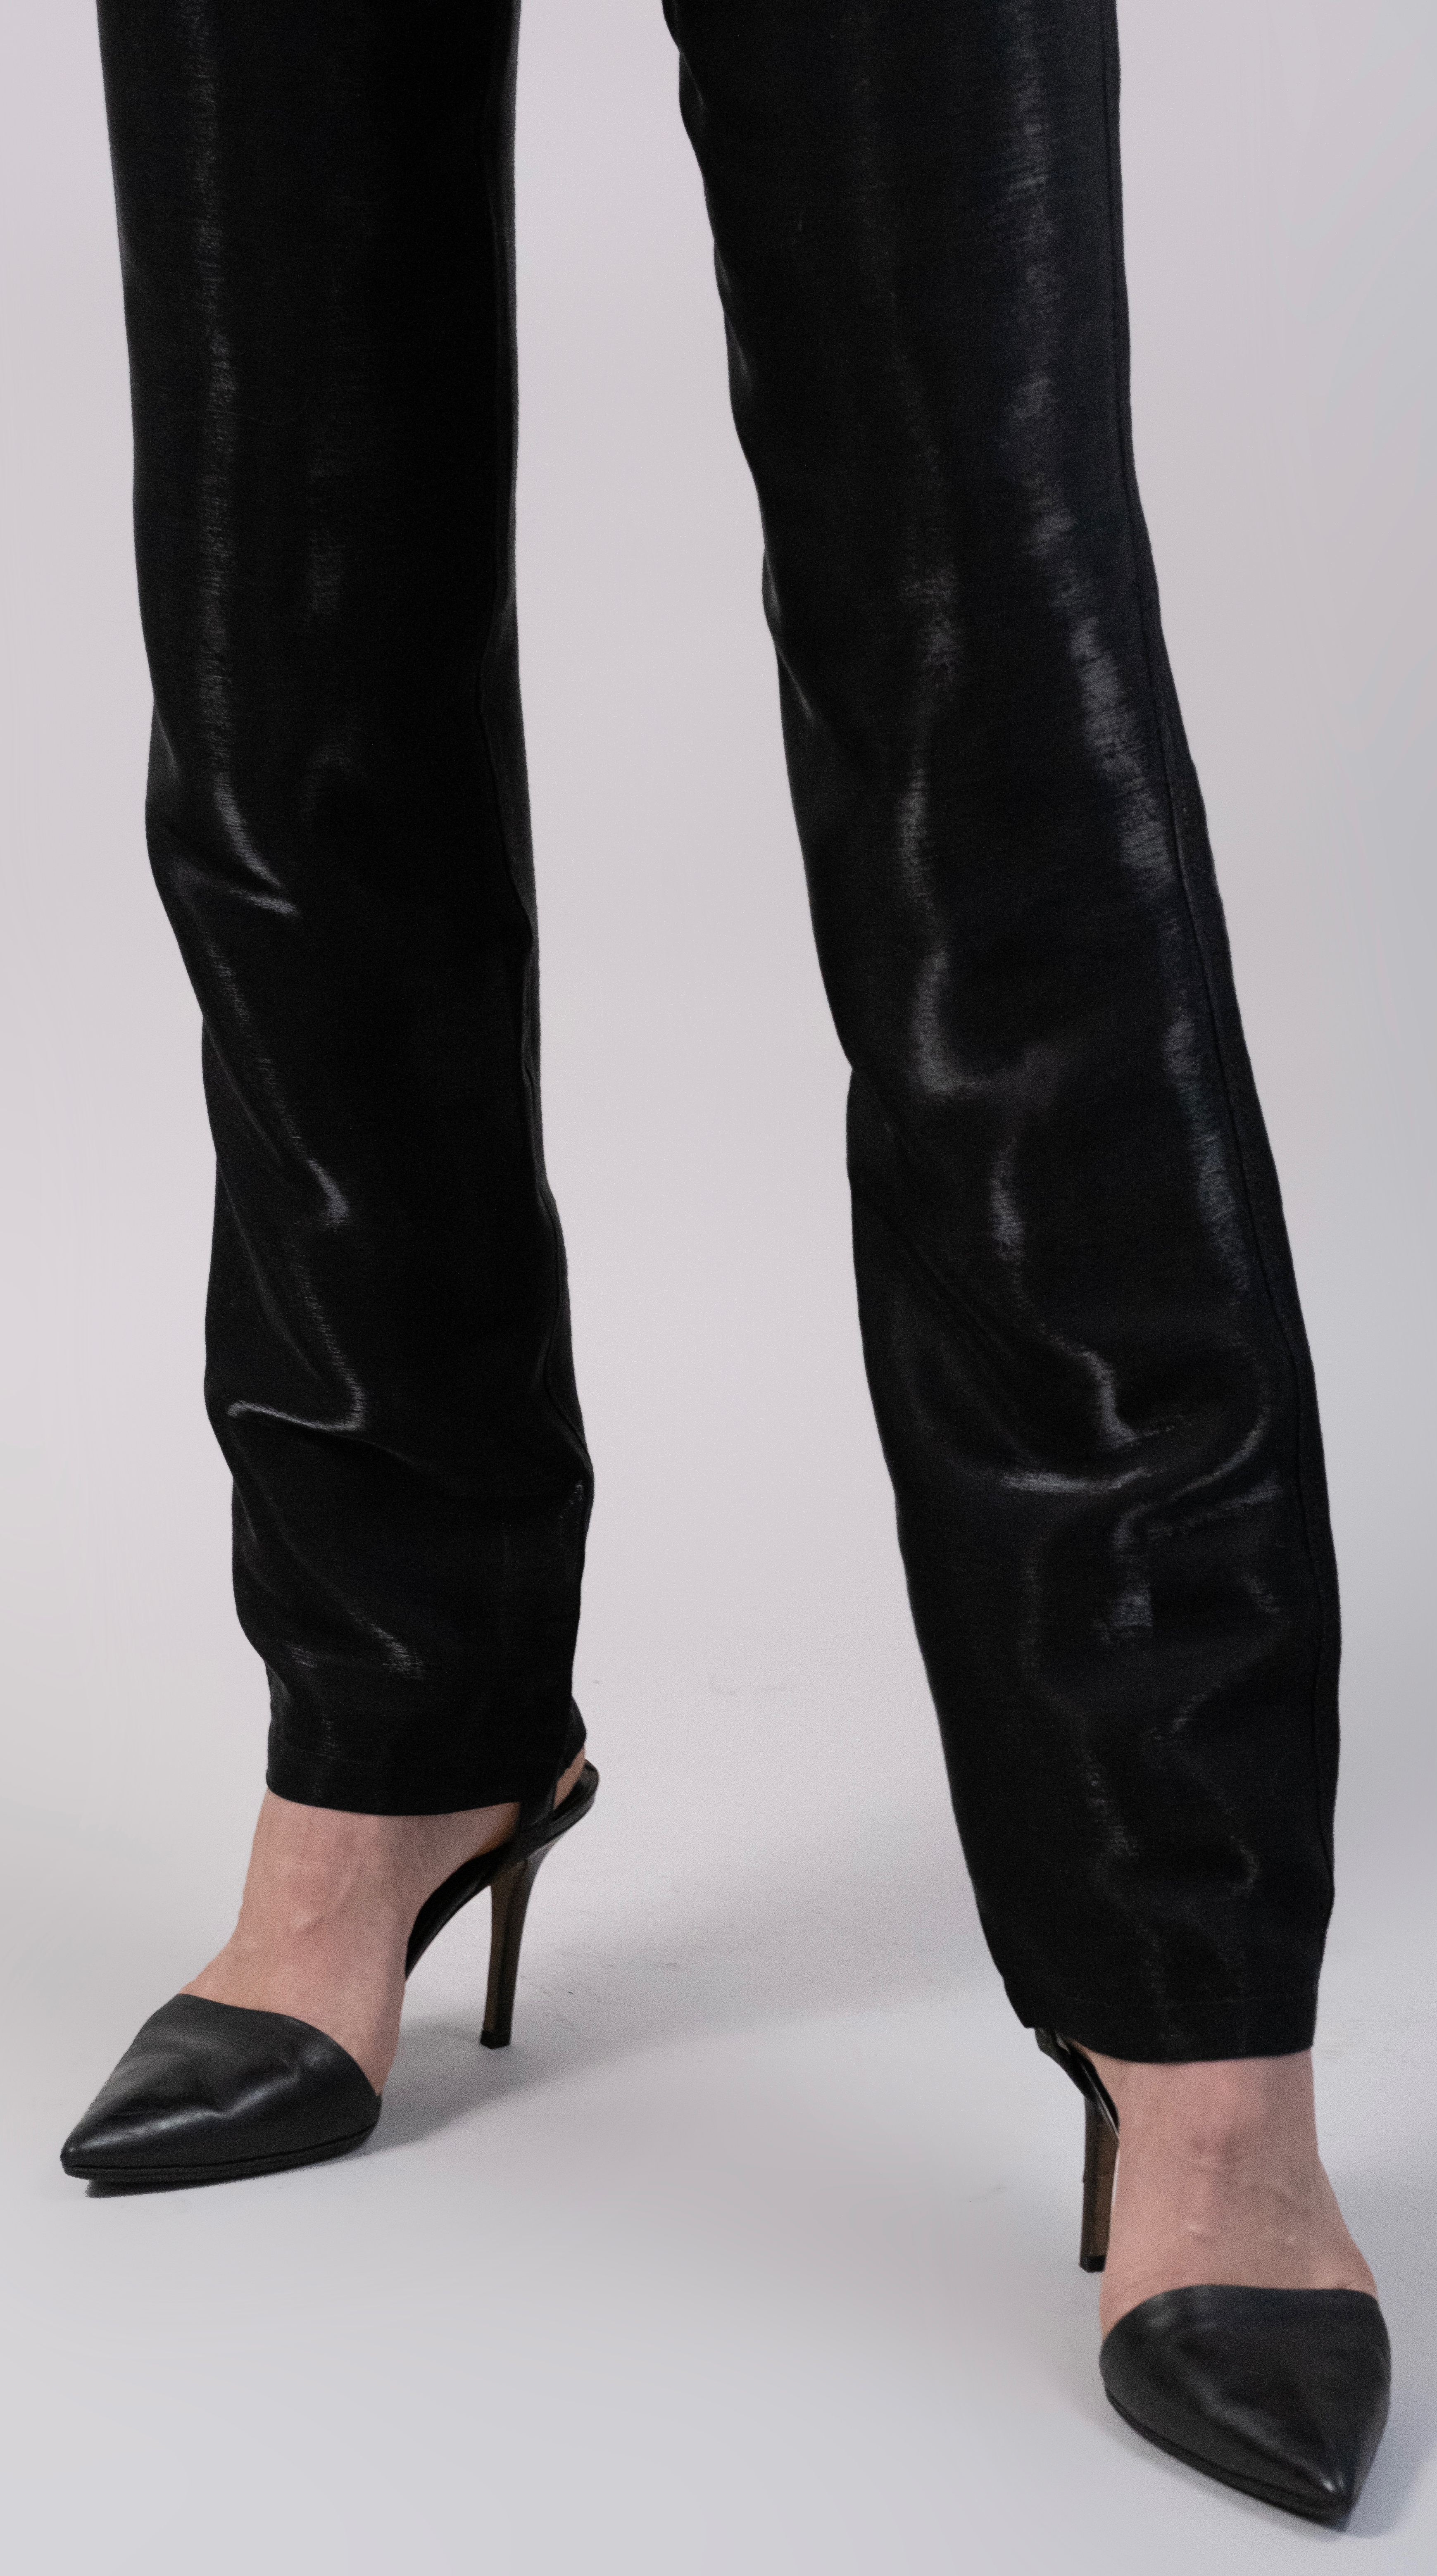 Liquid metal pants modeled by Sofe Cote